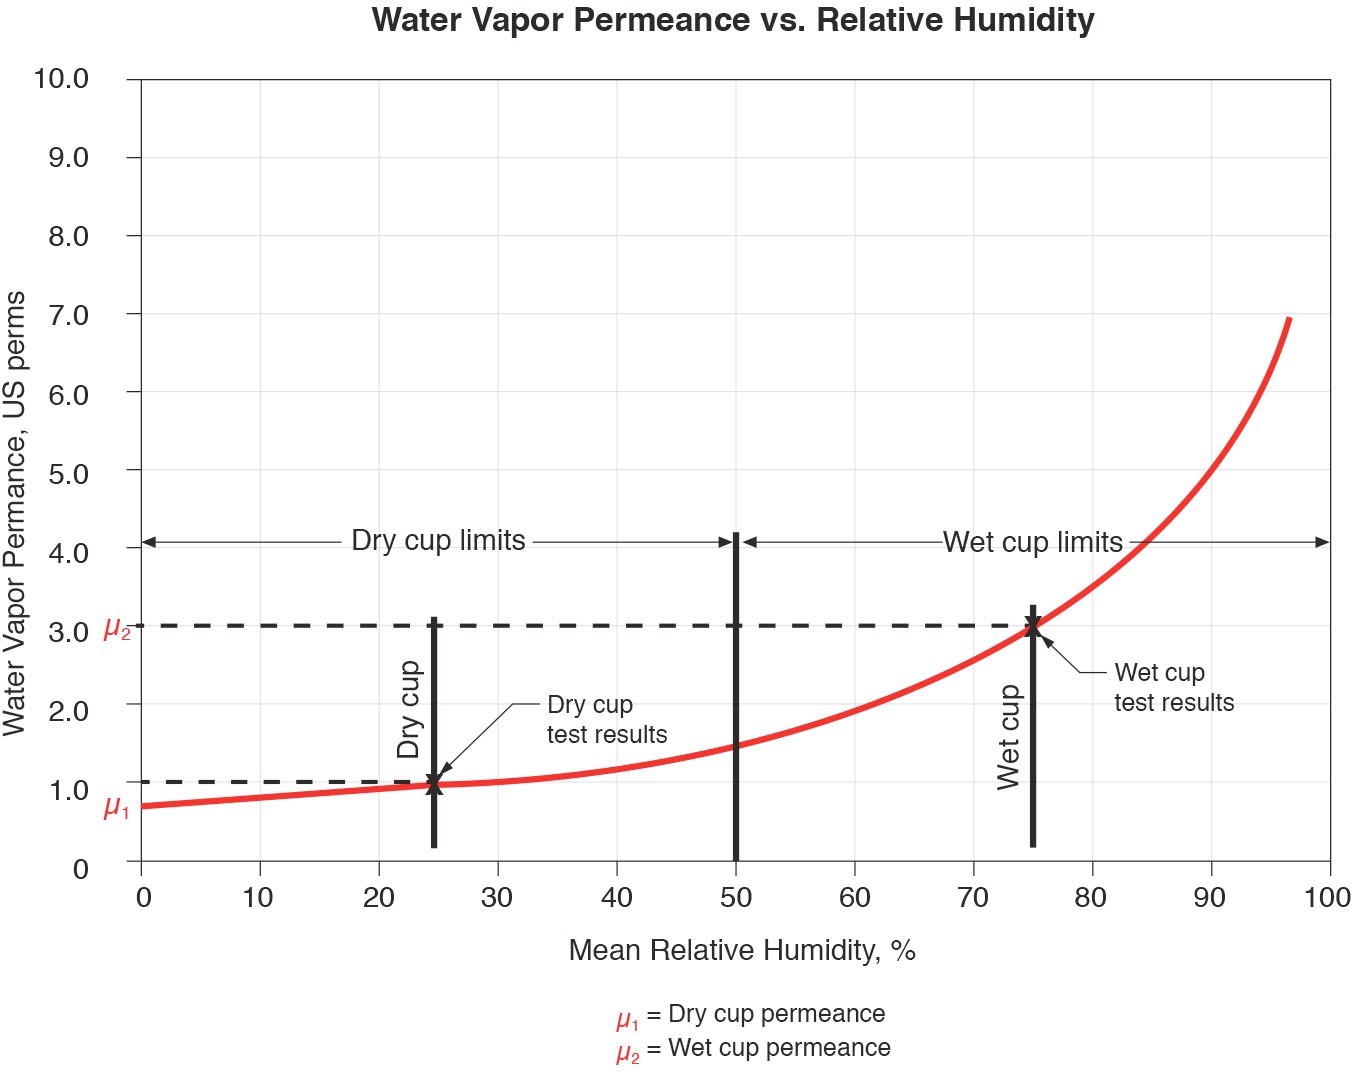 Figure 9: Vapor Permeance vs Relative Humidity